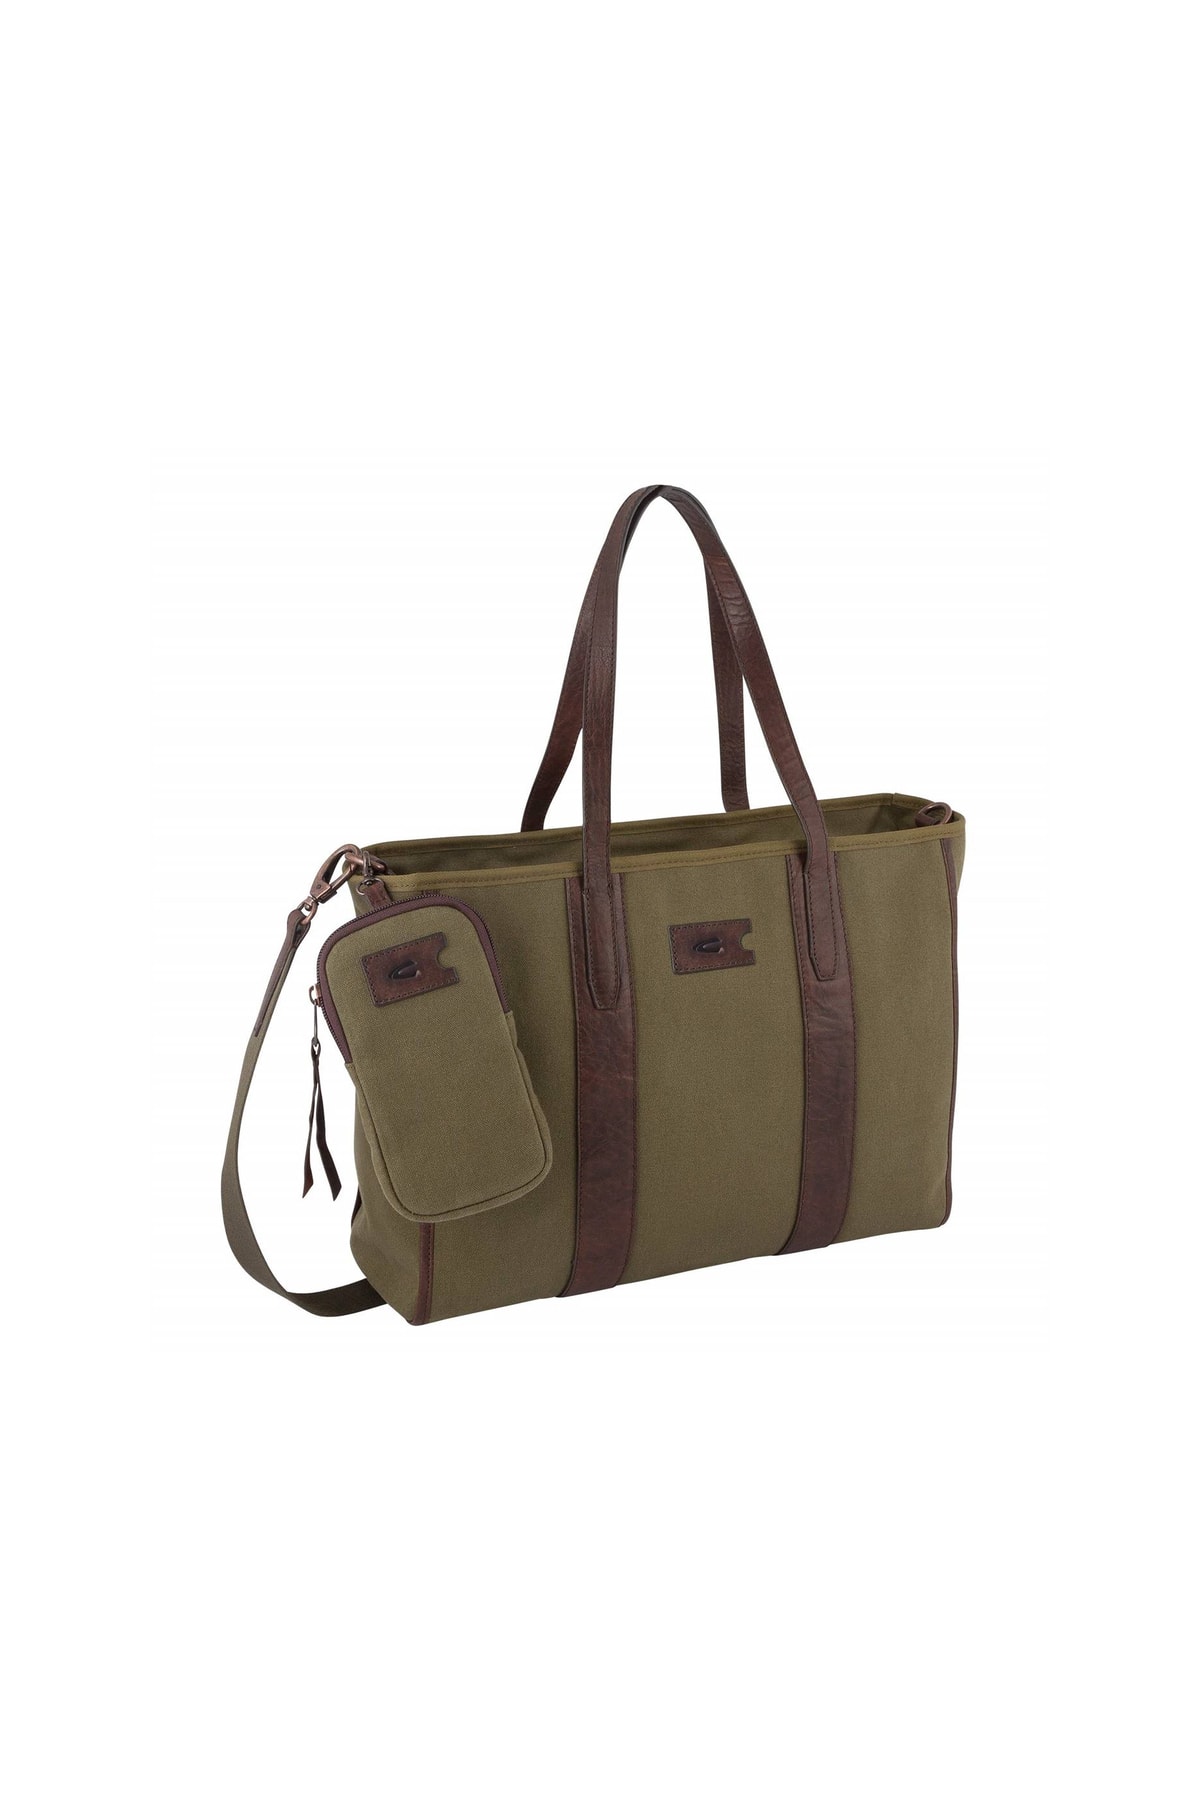 Camel Active Handtasche Grün Strukturiert Fast ausverkauft QV9148